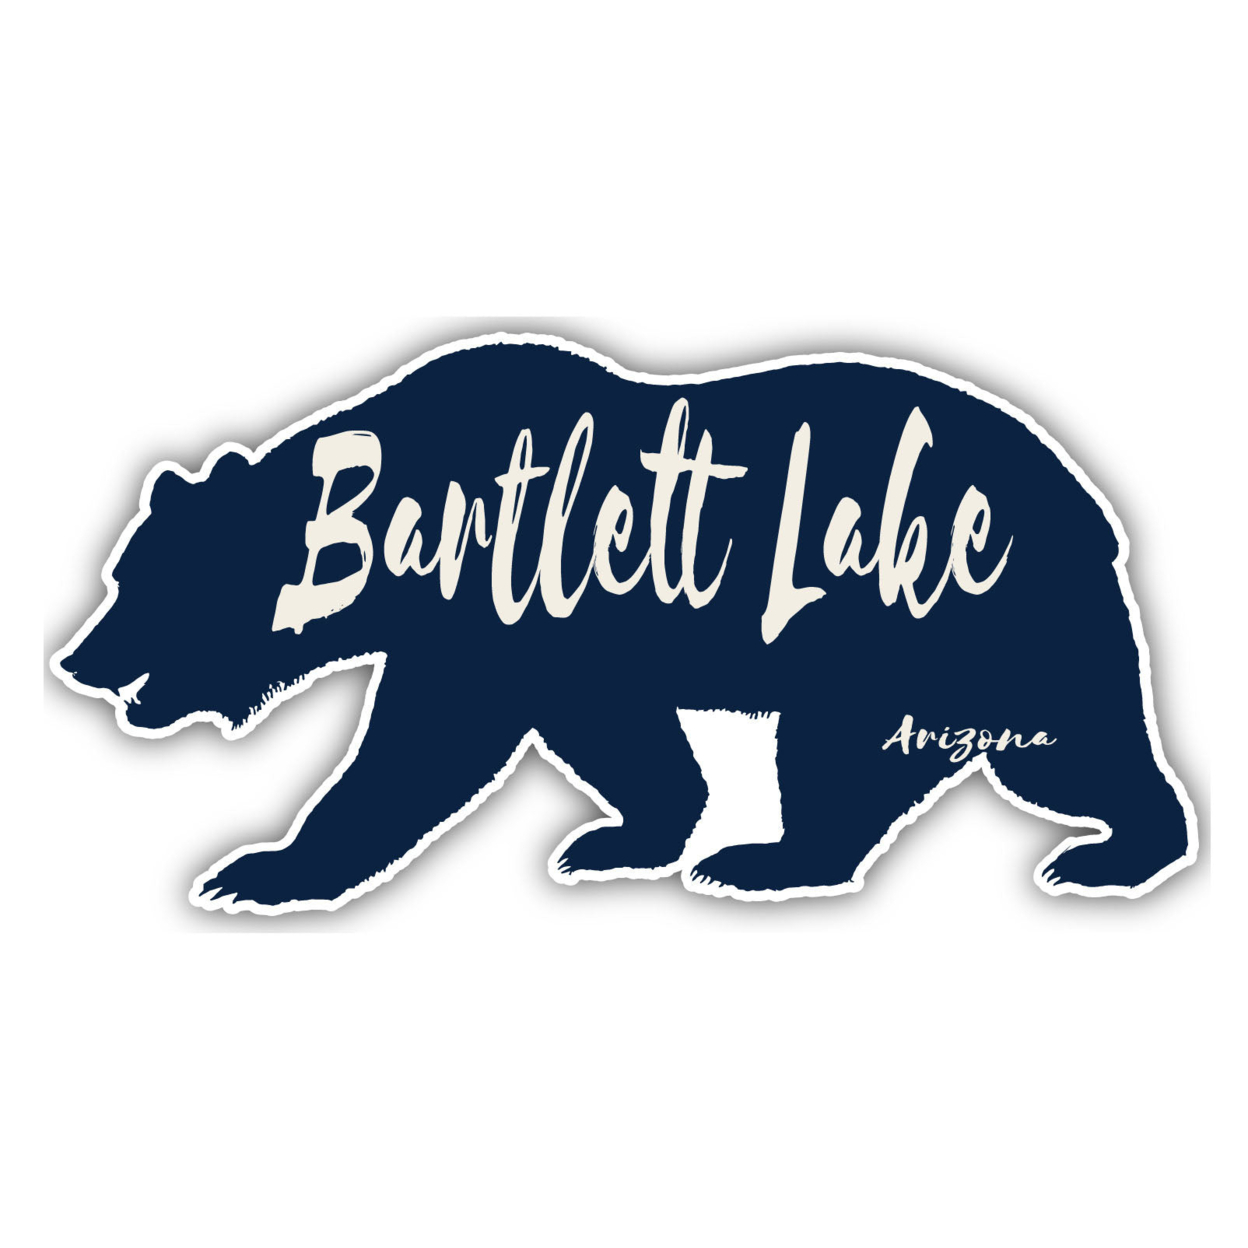 Bartlett Lake Arizona Souvenir Decorative Stickers (Choose Theme And Size) - 4-Pack, 2-Inch, Camp Life